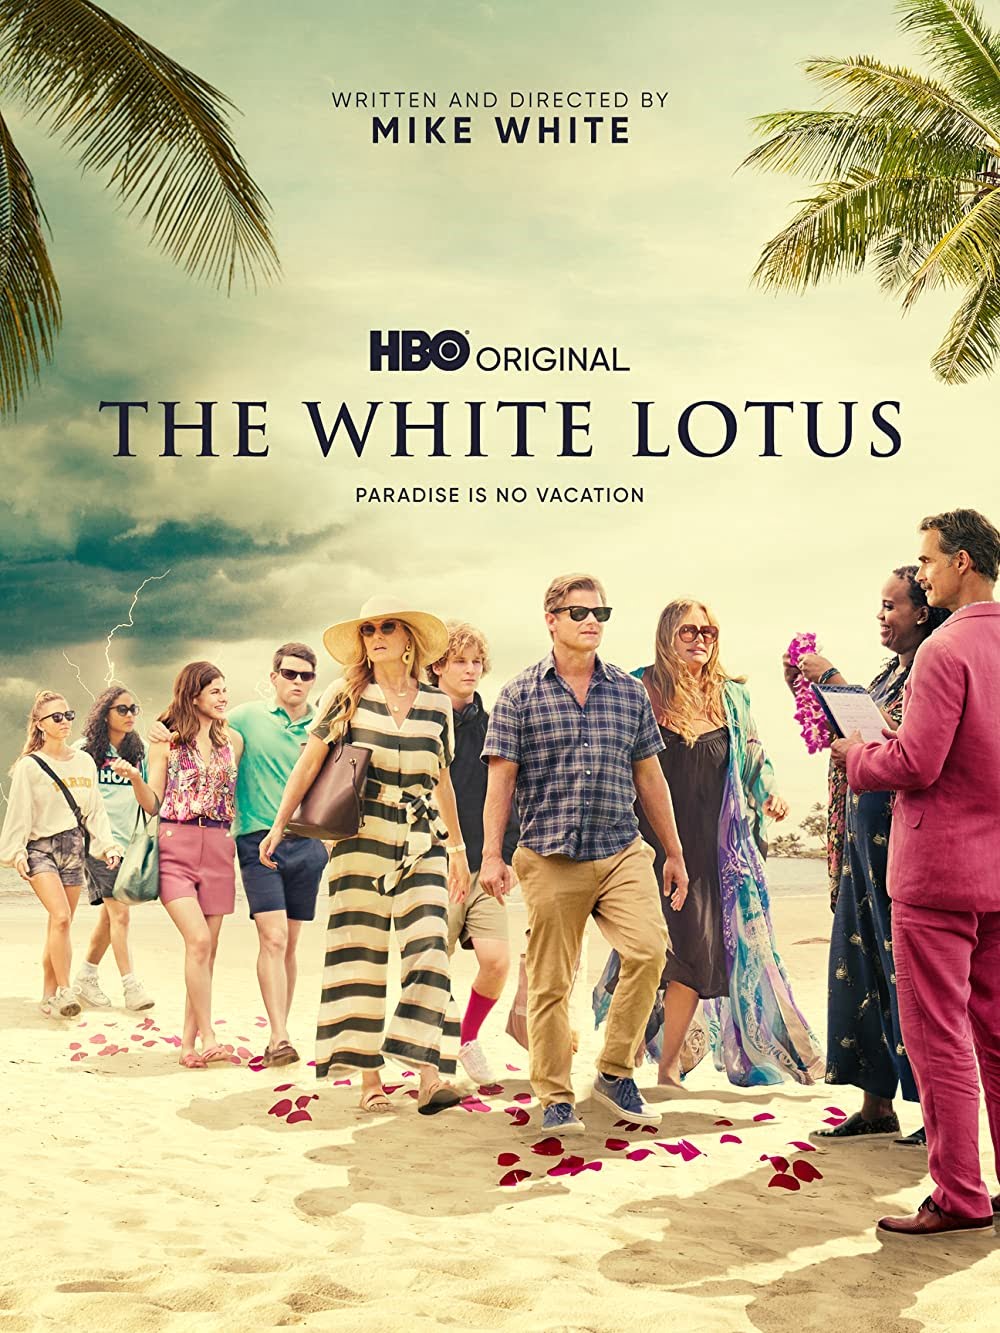 The White Lotus season 2 release new cast HBO location audrey plaza sydney sweeny Jennifer coolidge